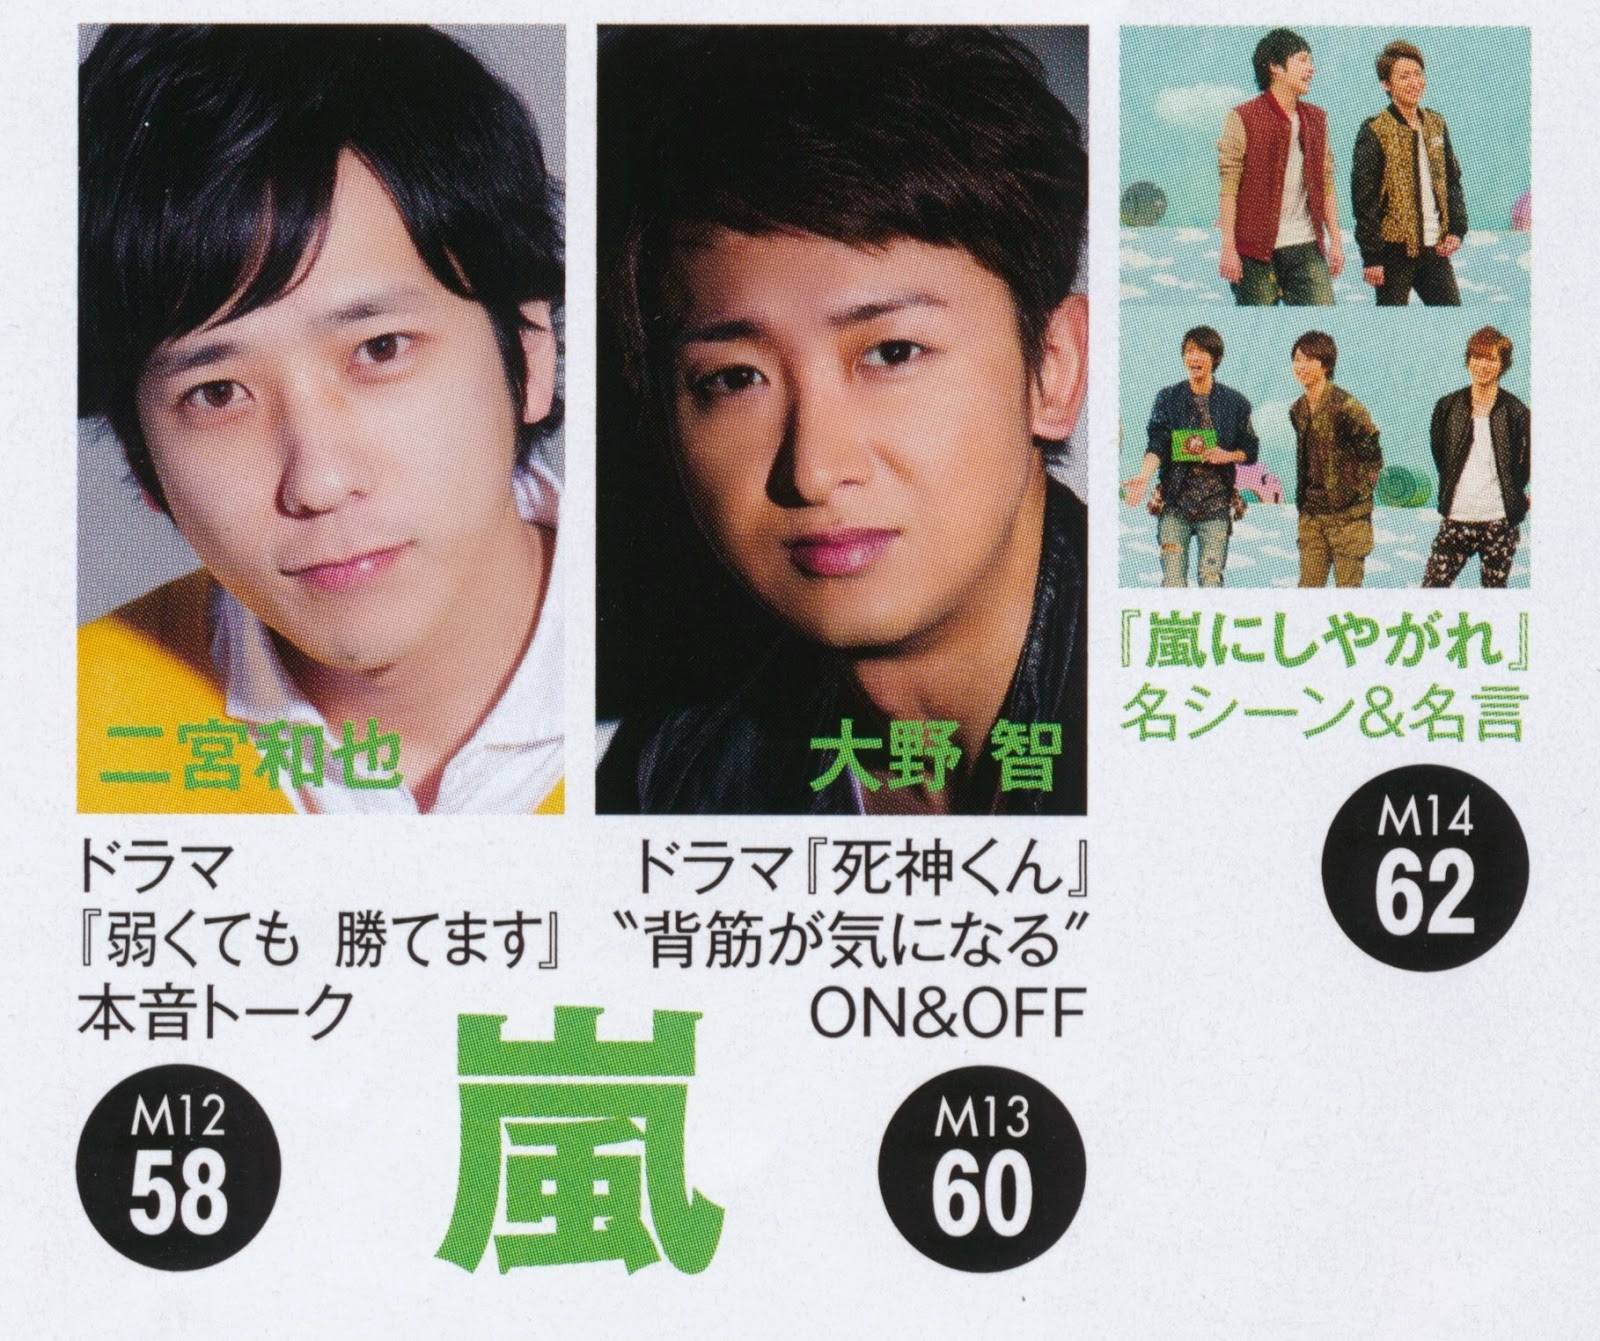 Arashi 3 Mandy S Blog Myojo 14年5月號 Popolo 14年5月號 內頁 嵐